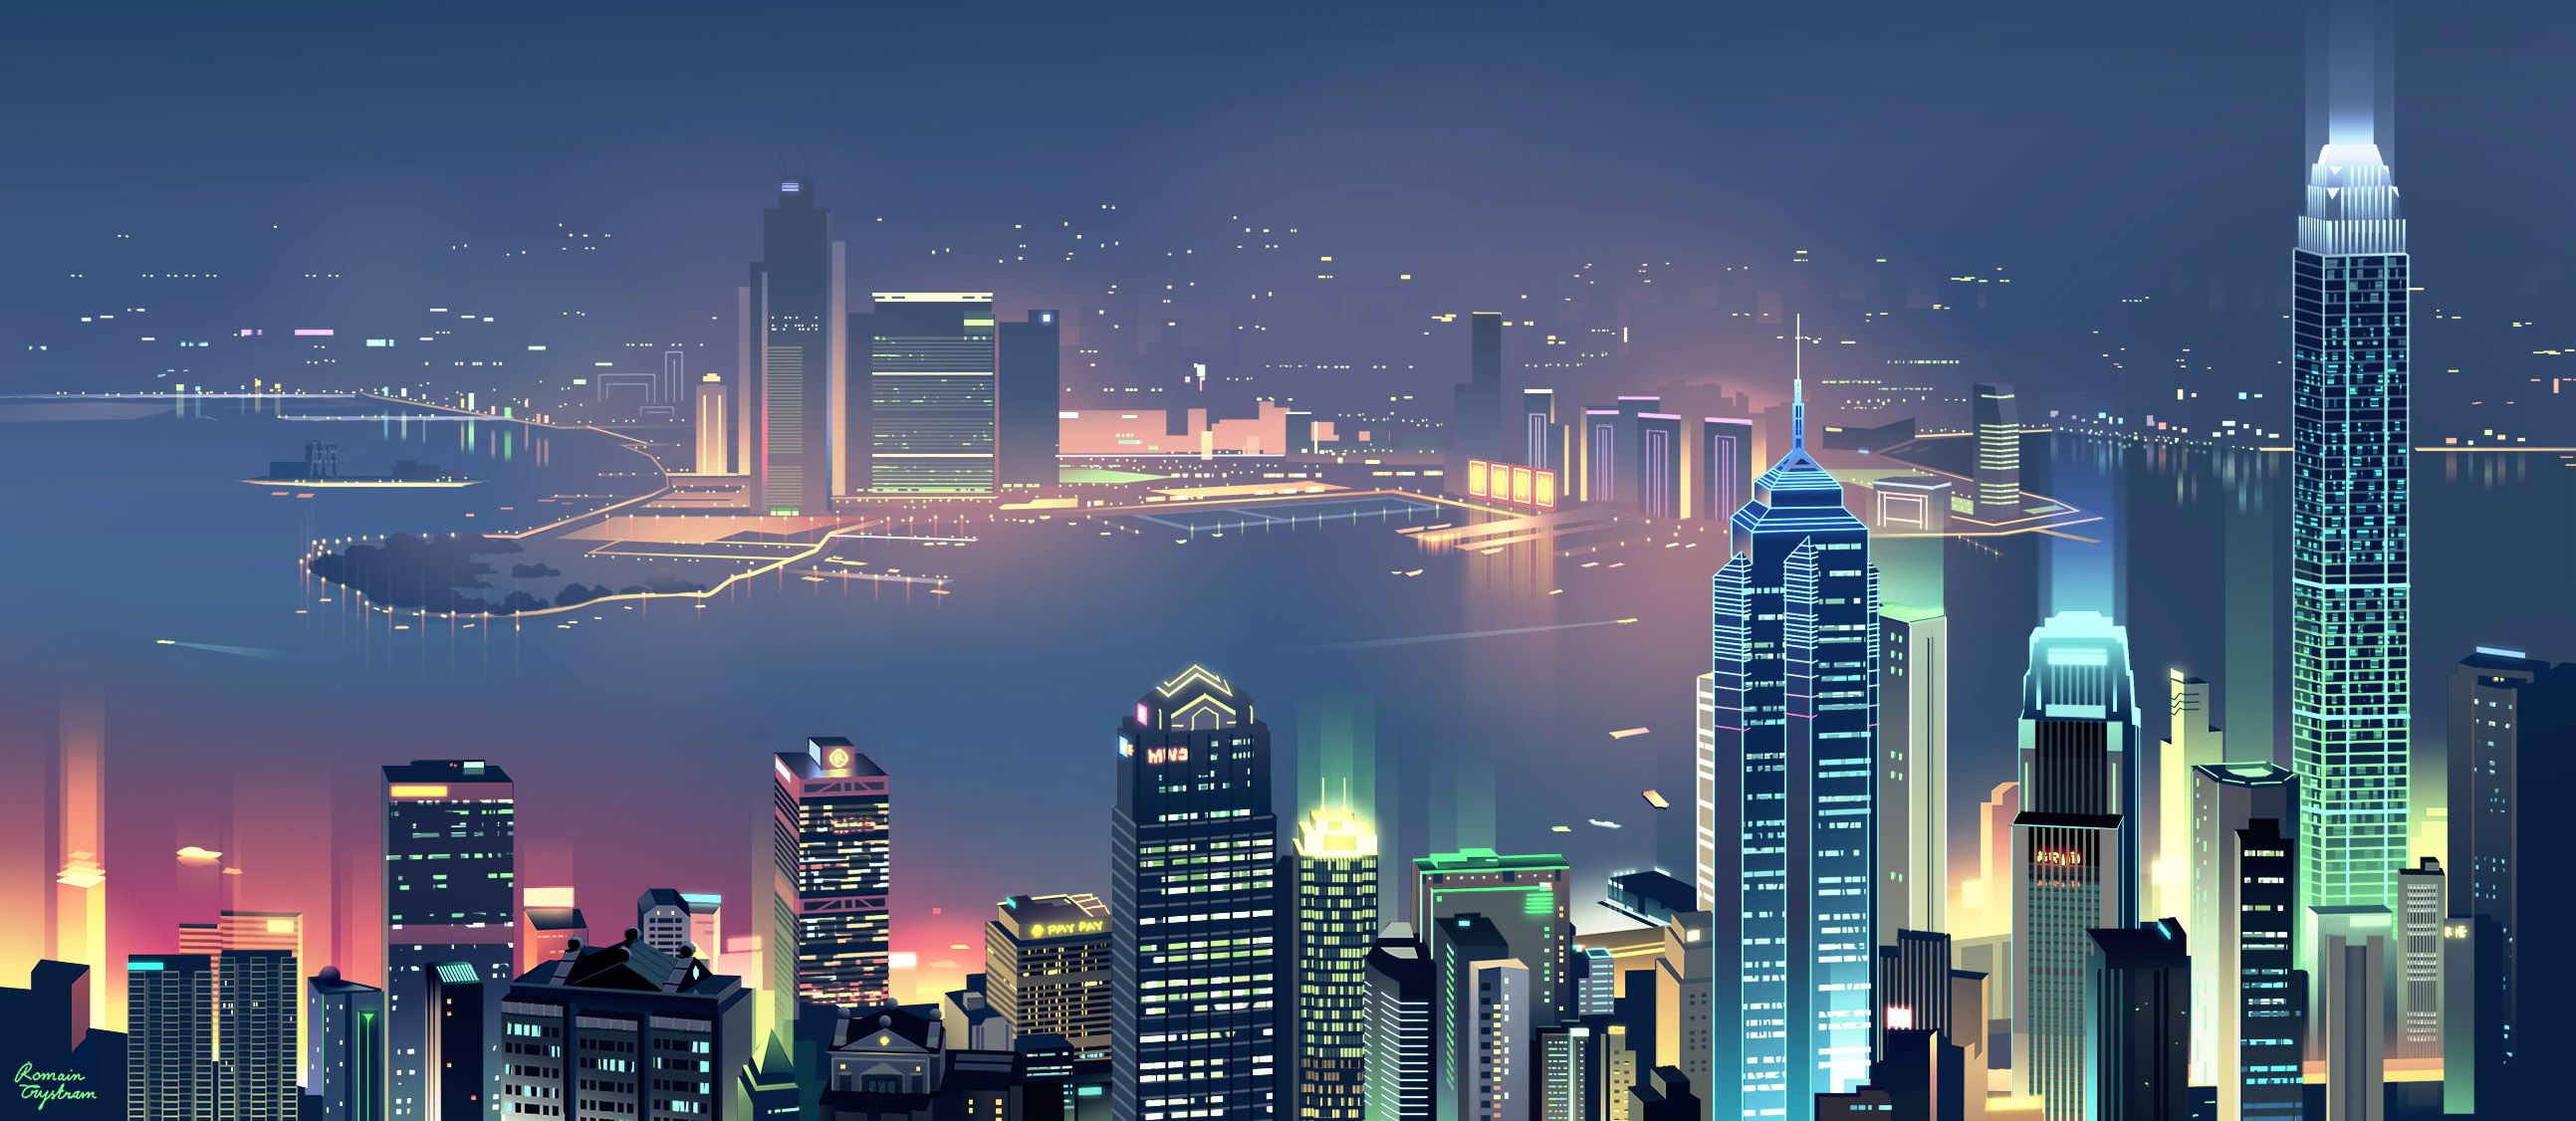 City Skyline Minimalist, HD Artist, 4k Wallpaper, Image